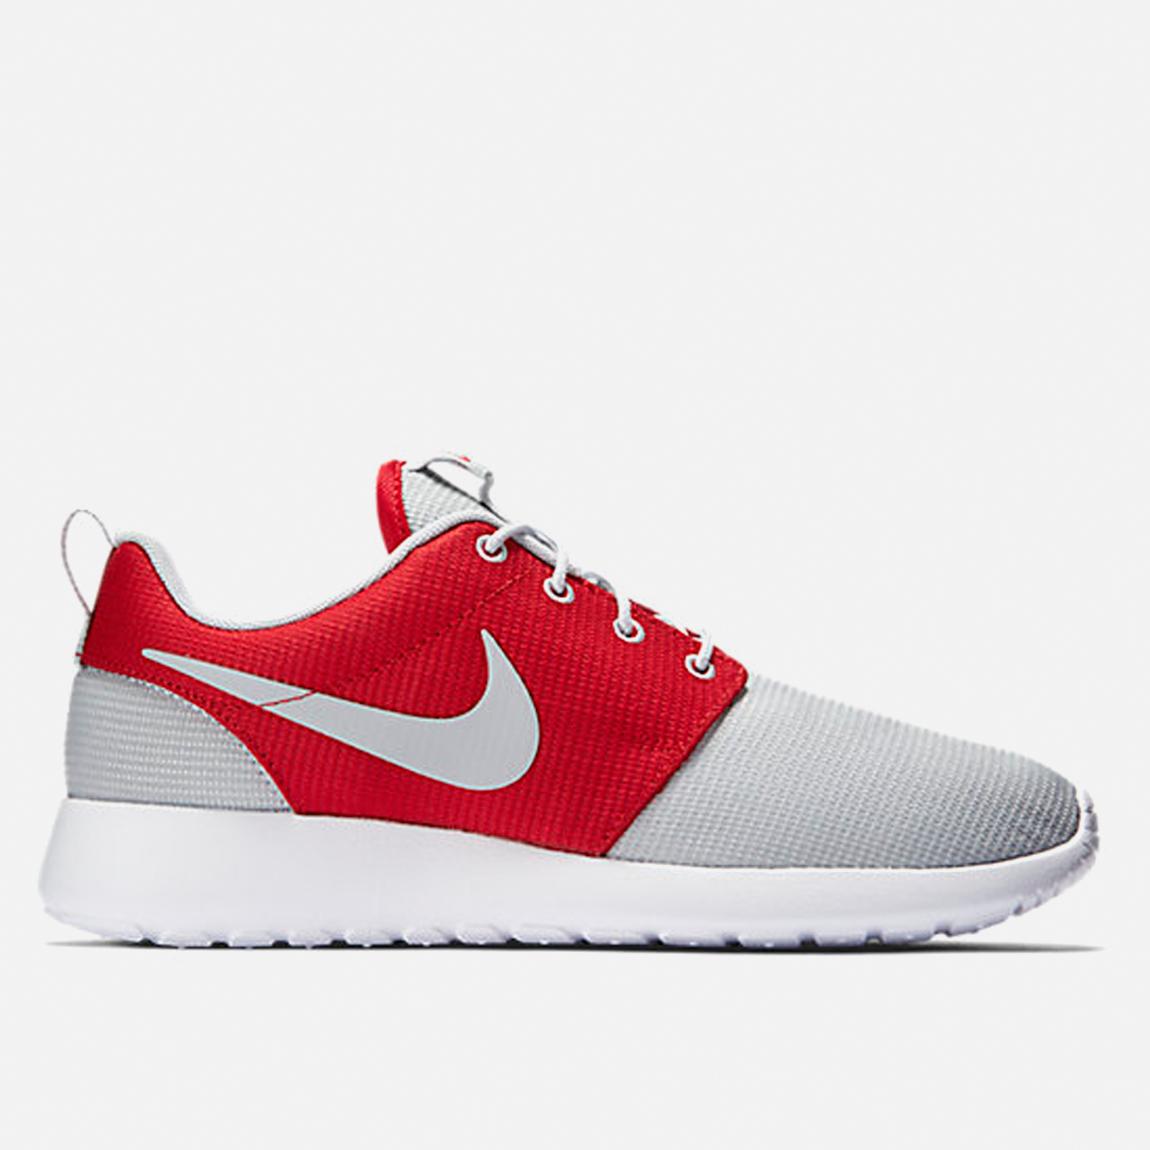 Roshe Run - RED WHITE Nike Sneakers | Superbalist.com